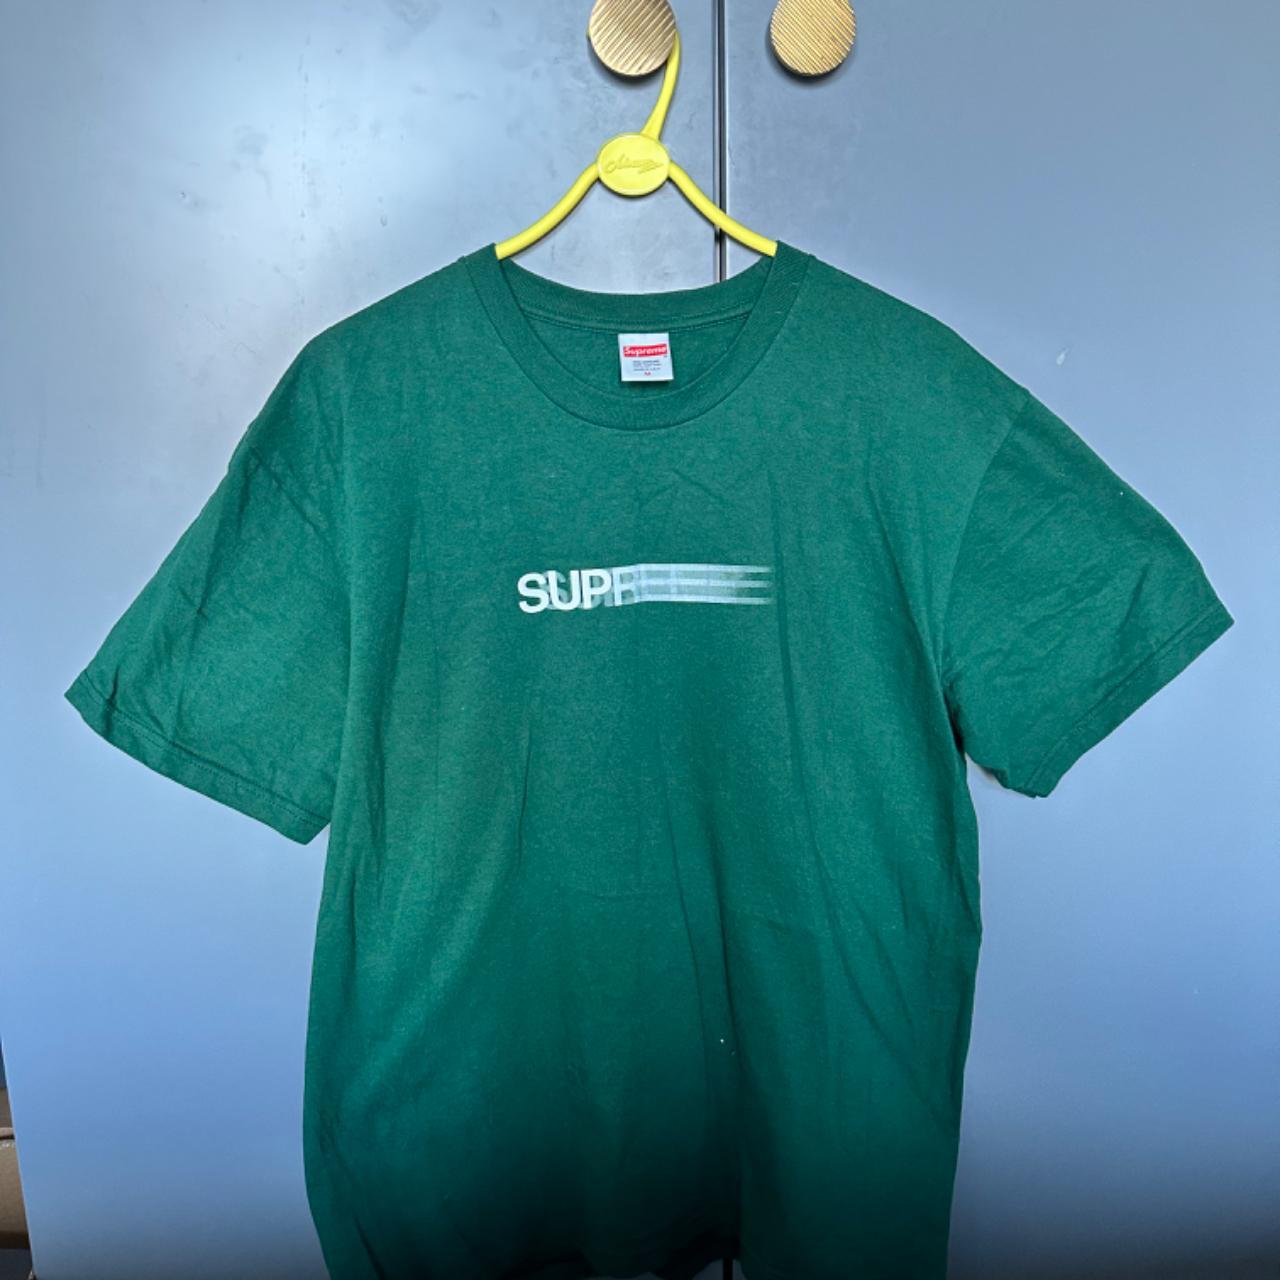 Supreme motion blur logo tee shirt. Green. Rare tee....